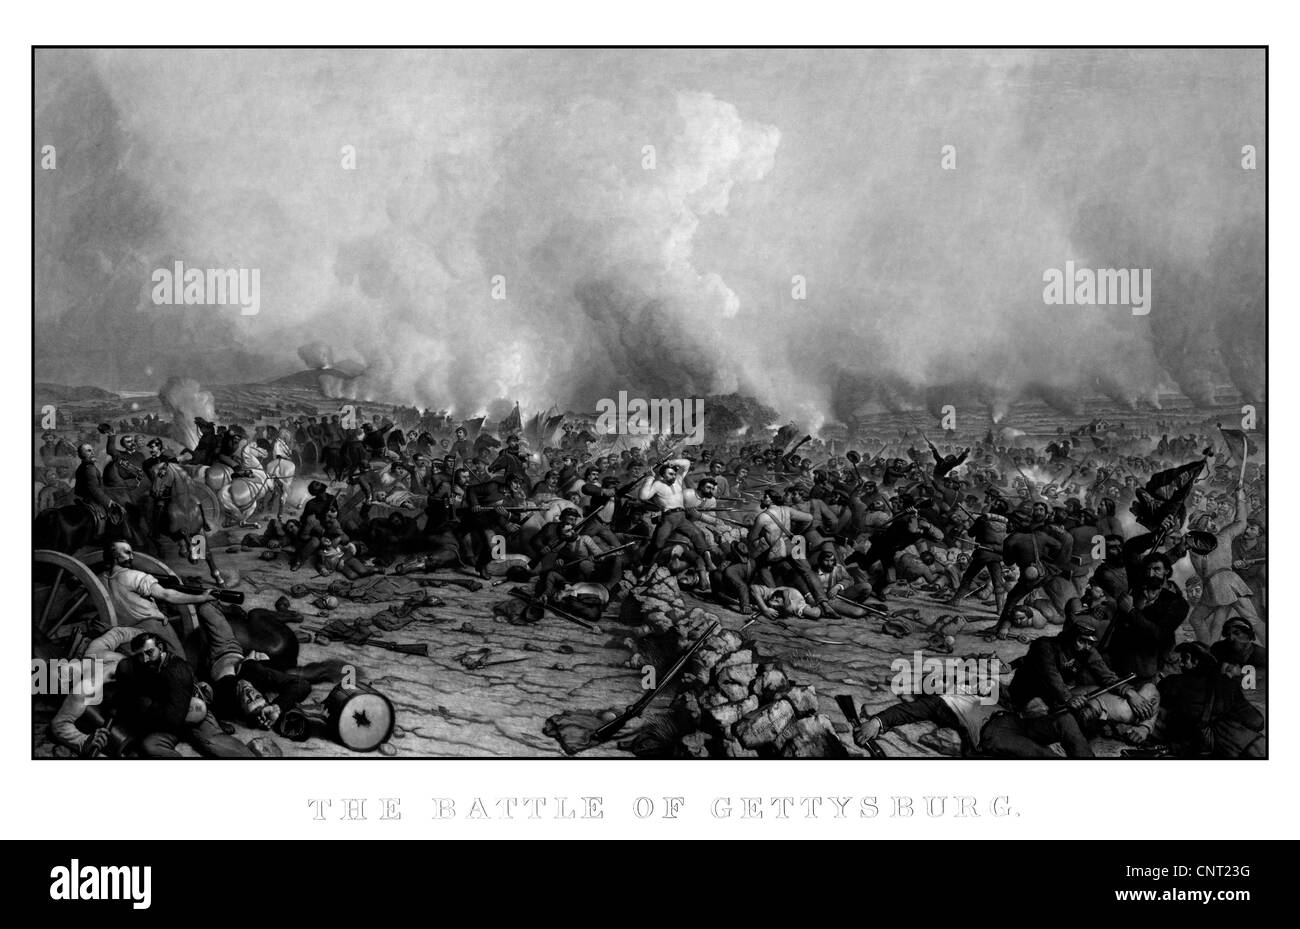 Guerra Civil vintage restaurada digitalmente imprimir de la Batalla de Gettysburg. Foto de stock